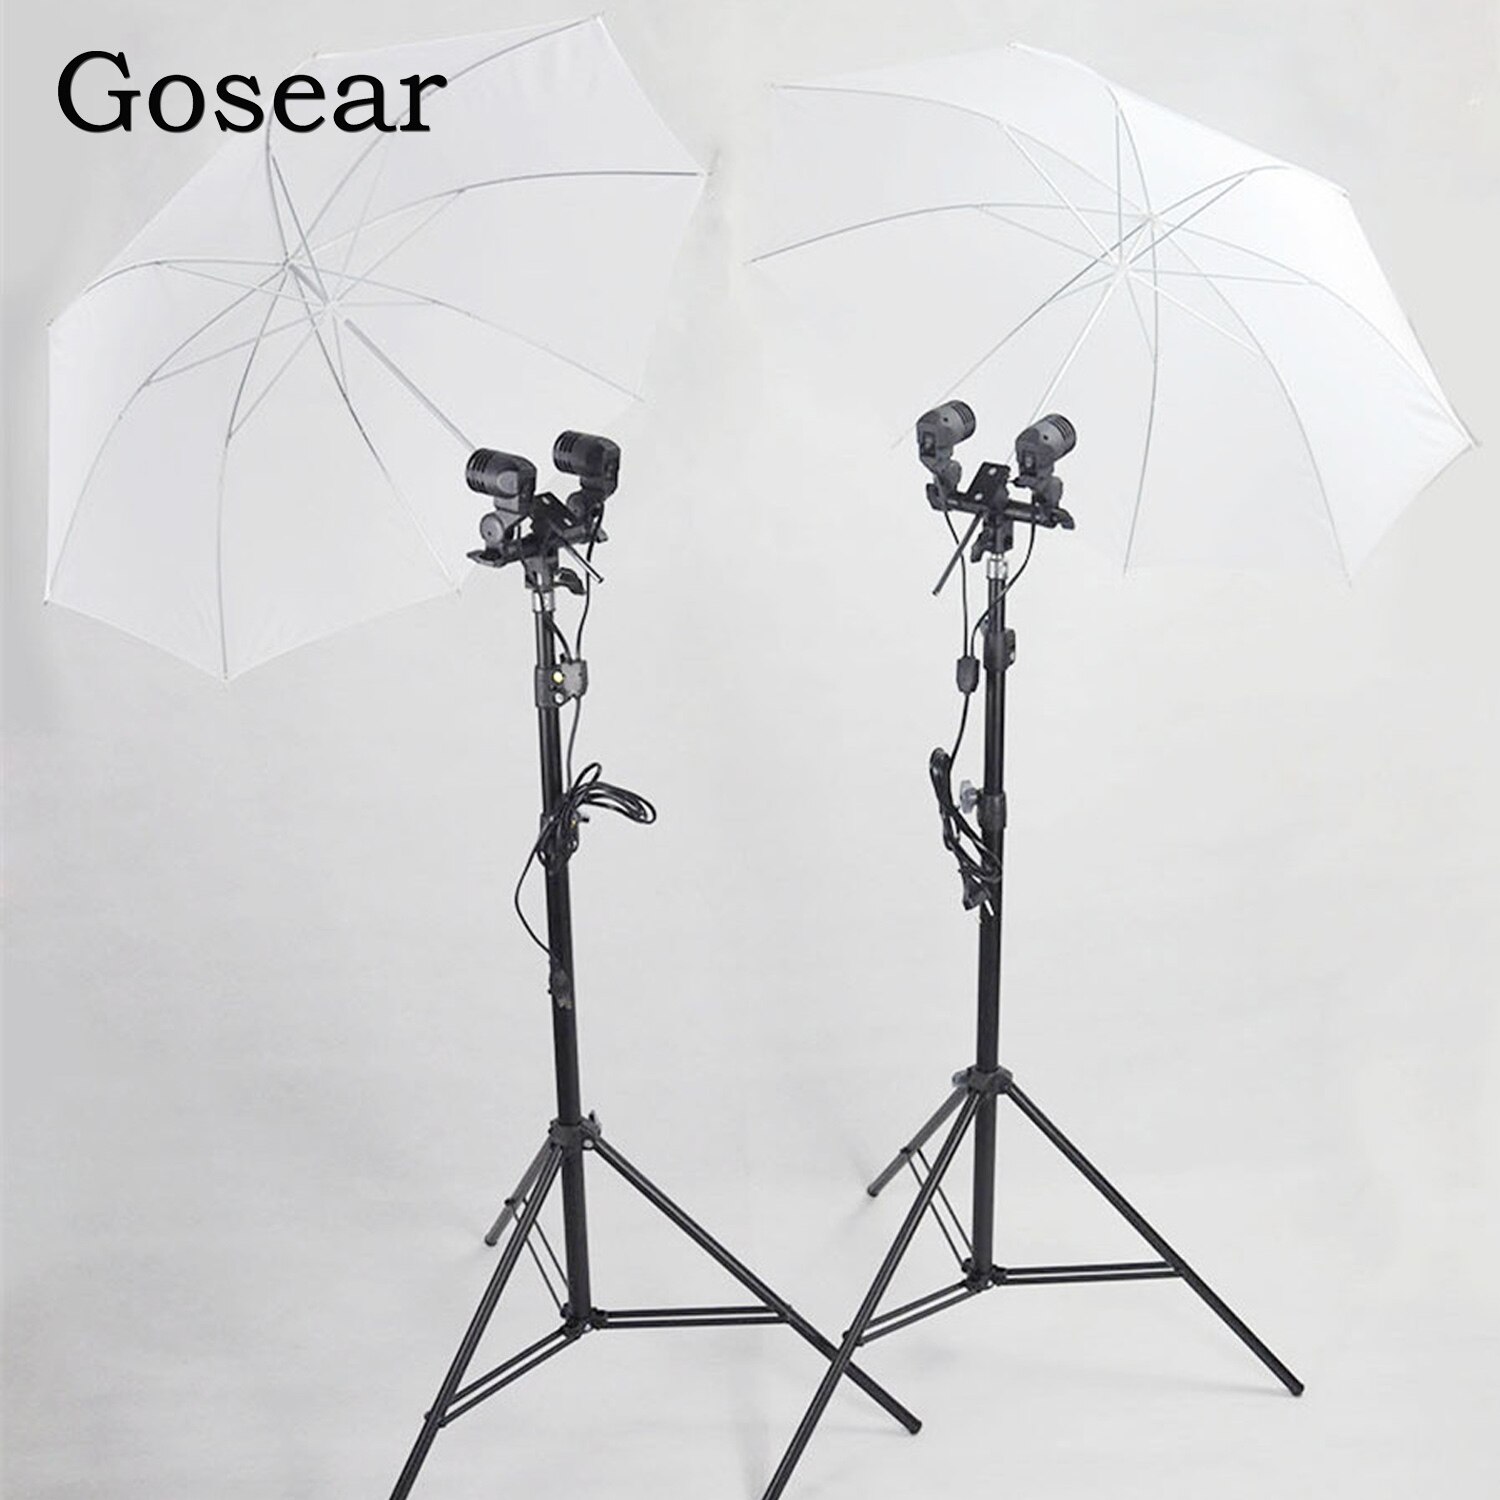 Gosear 85Cm Fotografie Studio Video Foto Licht Paraplu Witte Doorschijnende Diffuser Flash Zachte Paraplu Accessoires